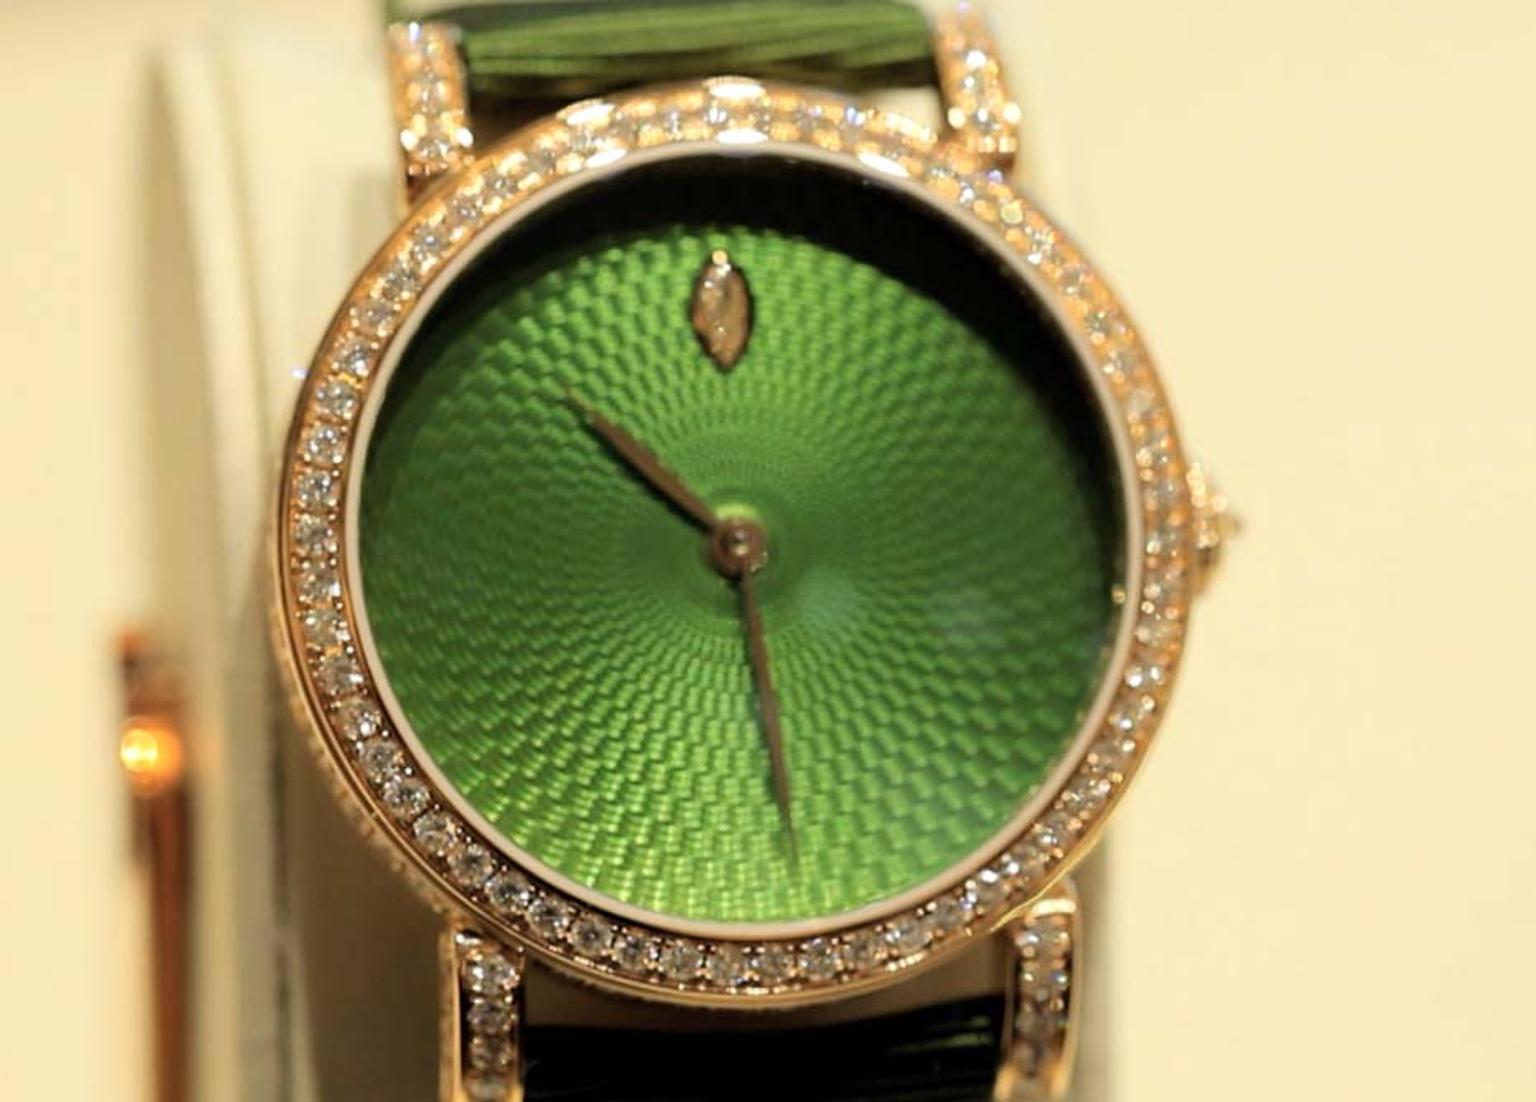 DeLaneau Rondo Translucent Green watch with a guilloché enamel dial